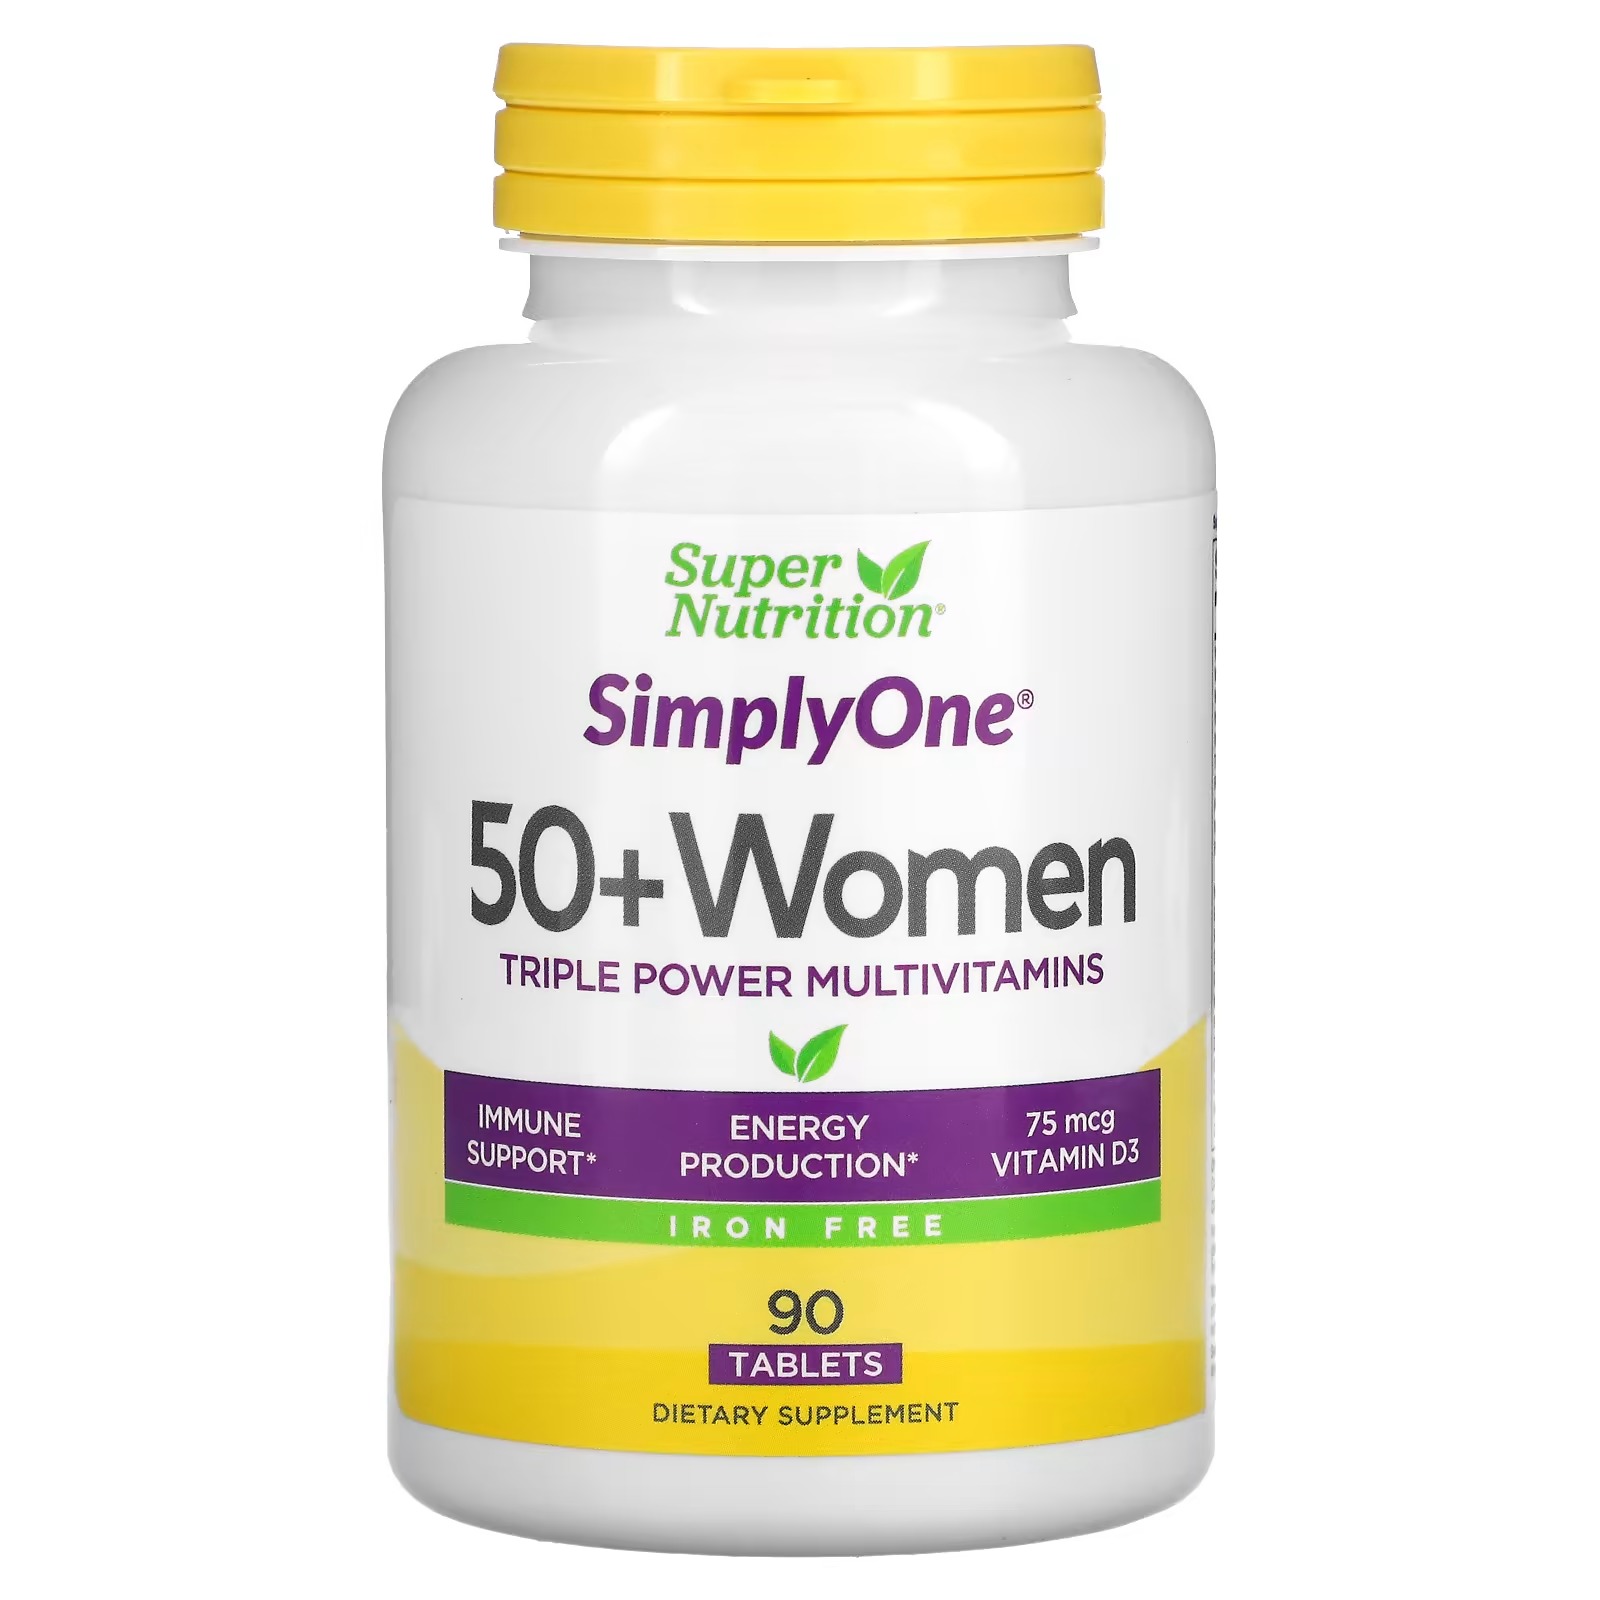 Мультивитамины Super Nutrition Triple Power для женщин старше 50 лет, 90 таблеток мультивитамины super nutrition simplyone для женщин 50 без железа 30 таблеток